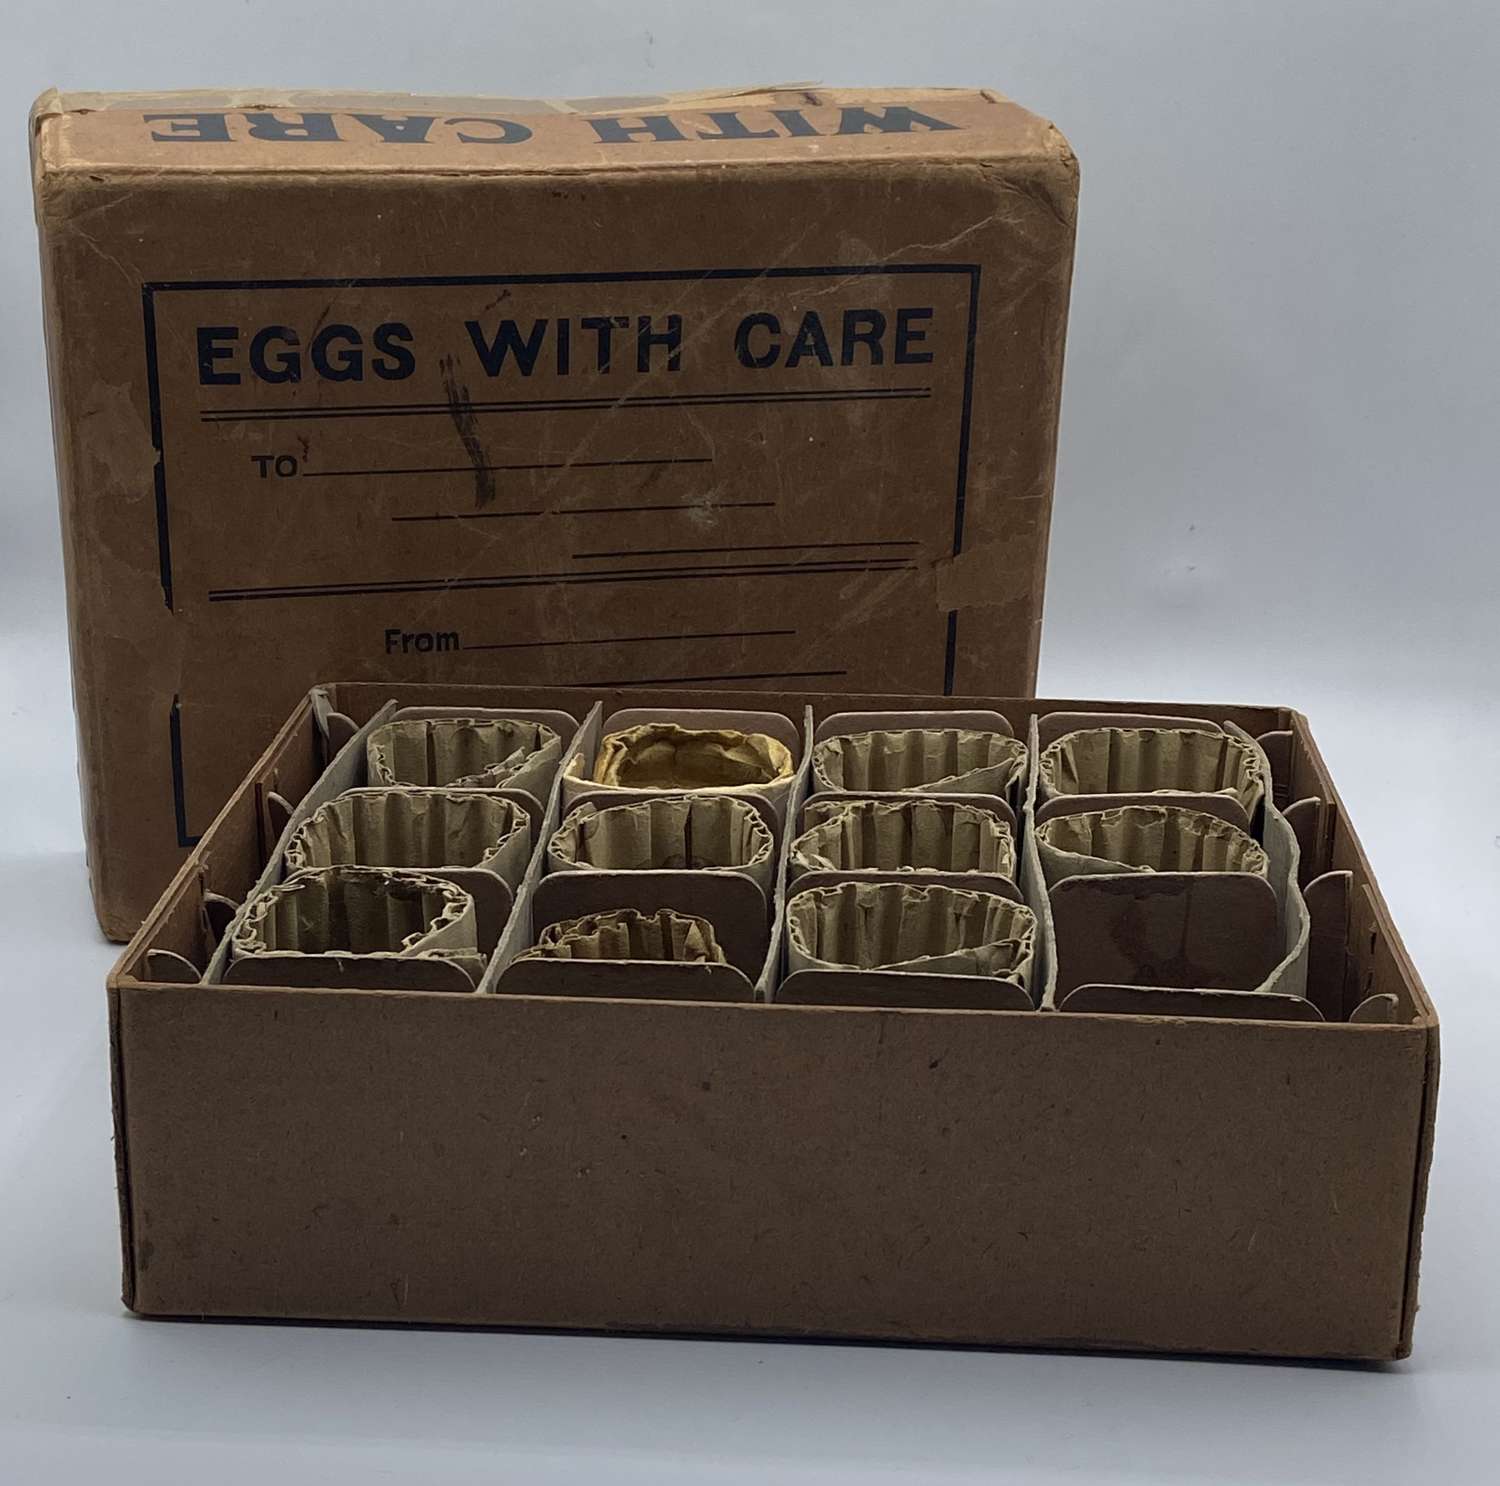 WW2 Home Front Eggs Postal Box